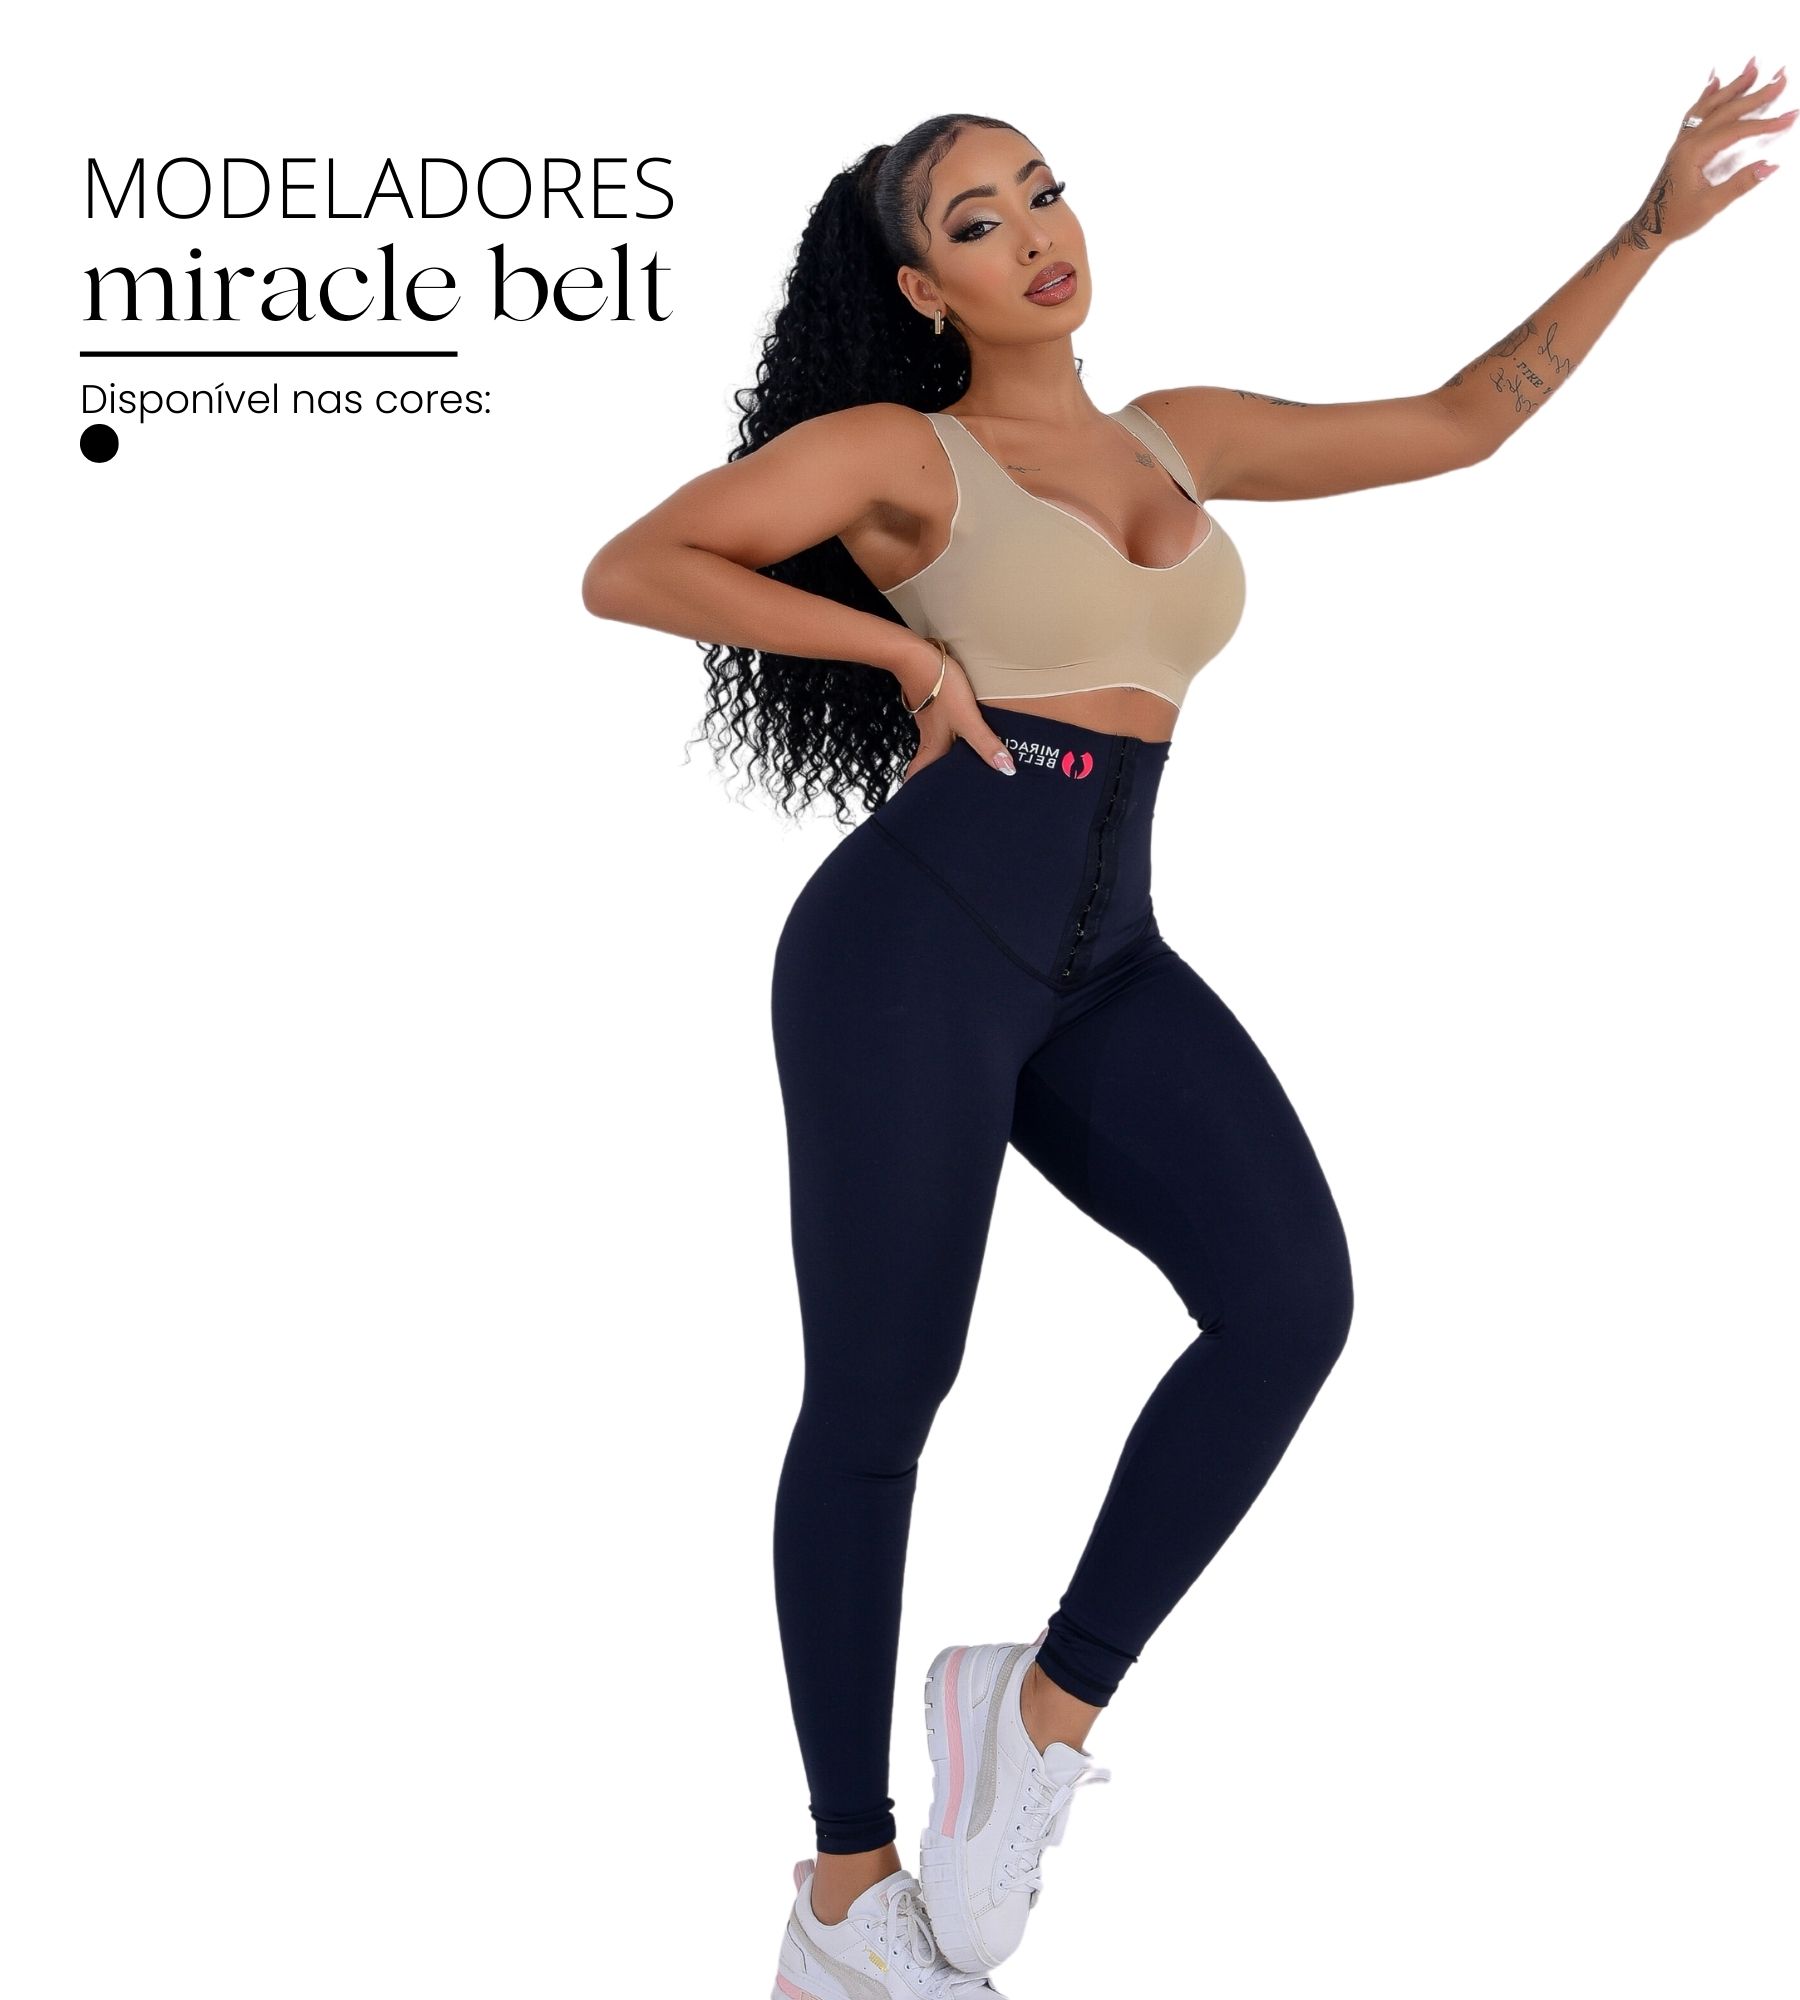 Legging Modeladora - Cinta modeladora feminina - A original Miracle Belt